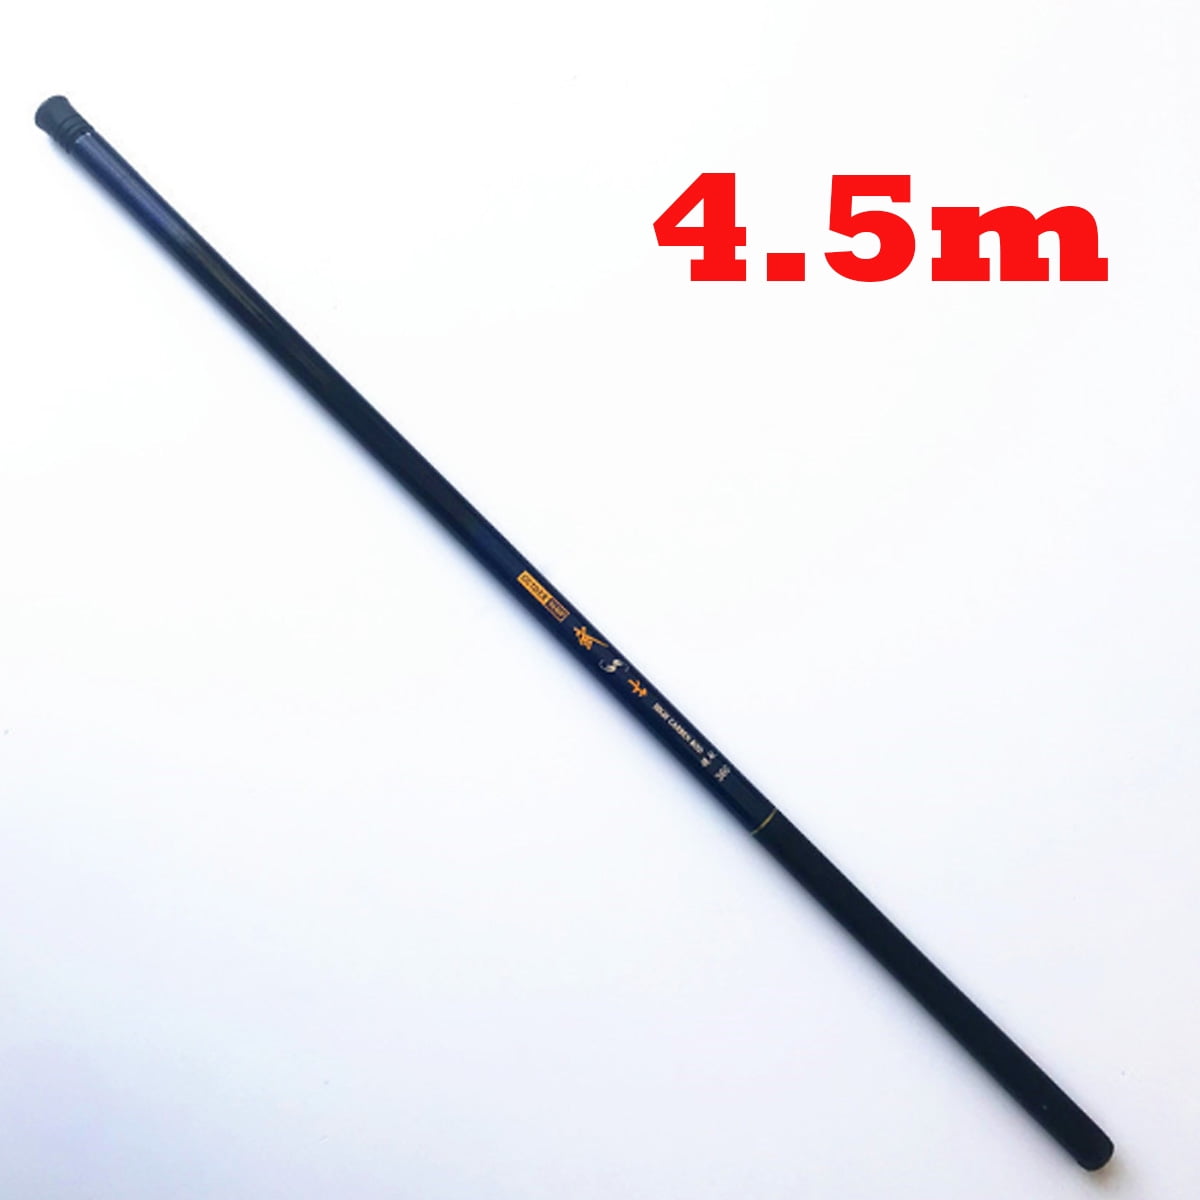 2.7M 7.2M Glass Fiber Spinning Hand Fishing Rod Telescopic Stream Pole UK 